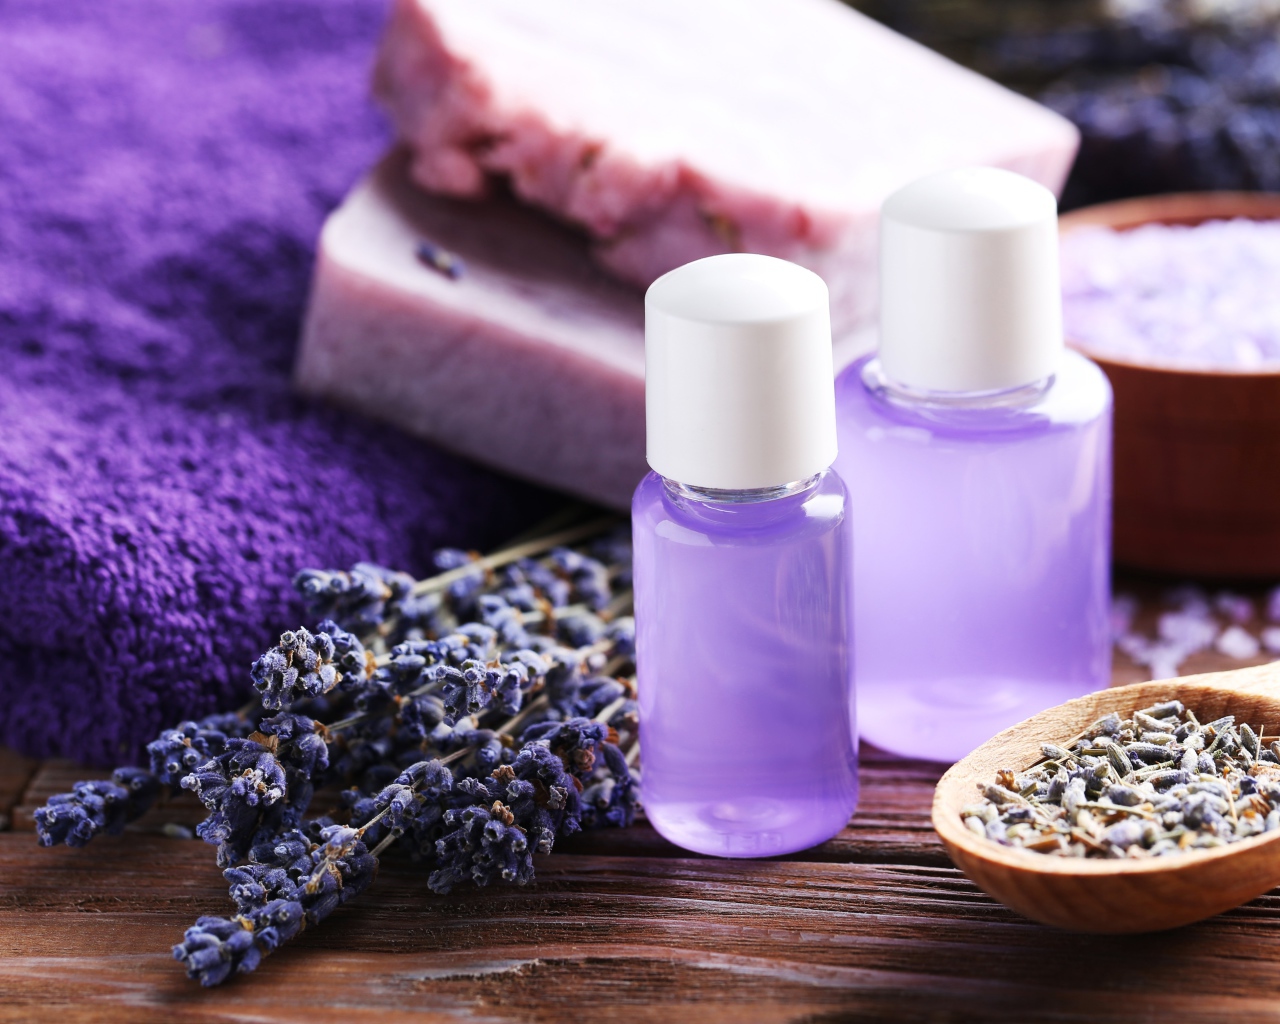 Soap, lavender, oils and salt for spa treatments